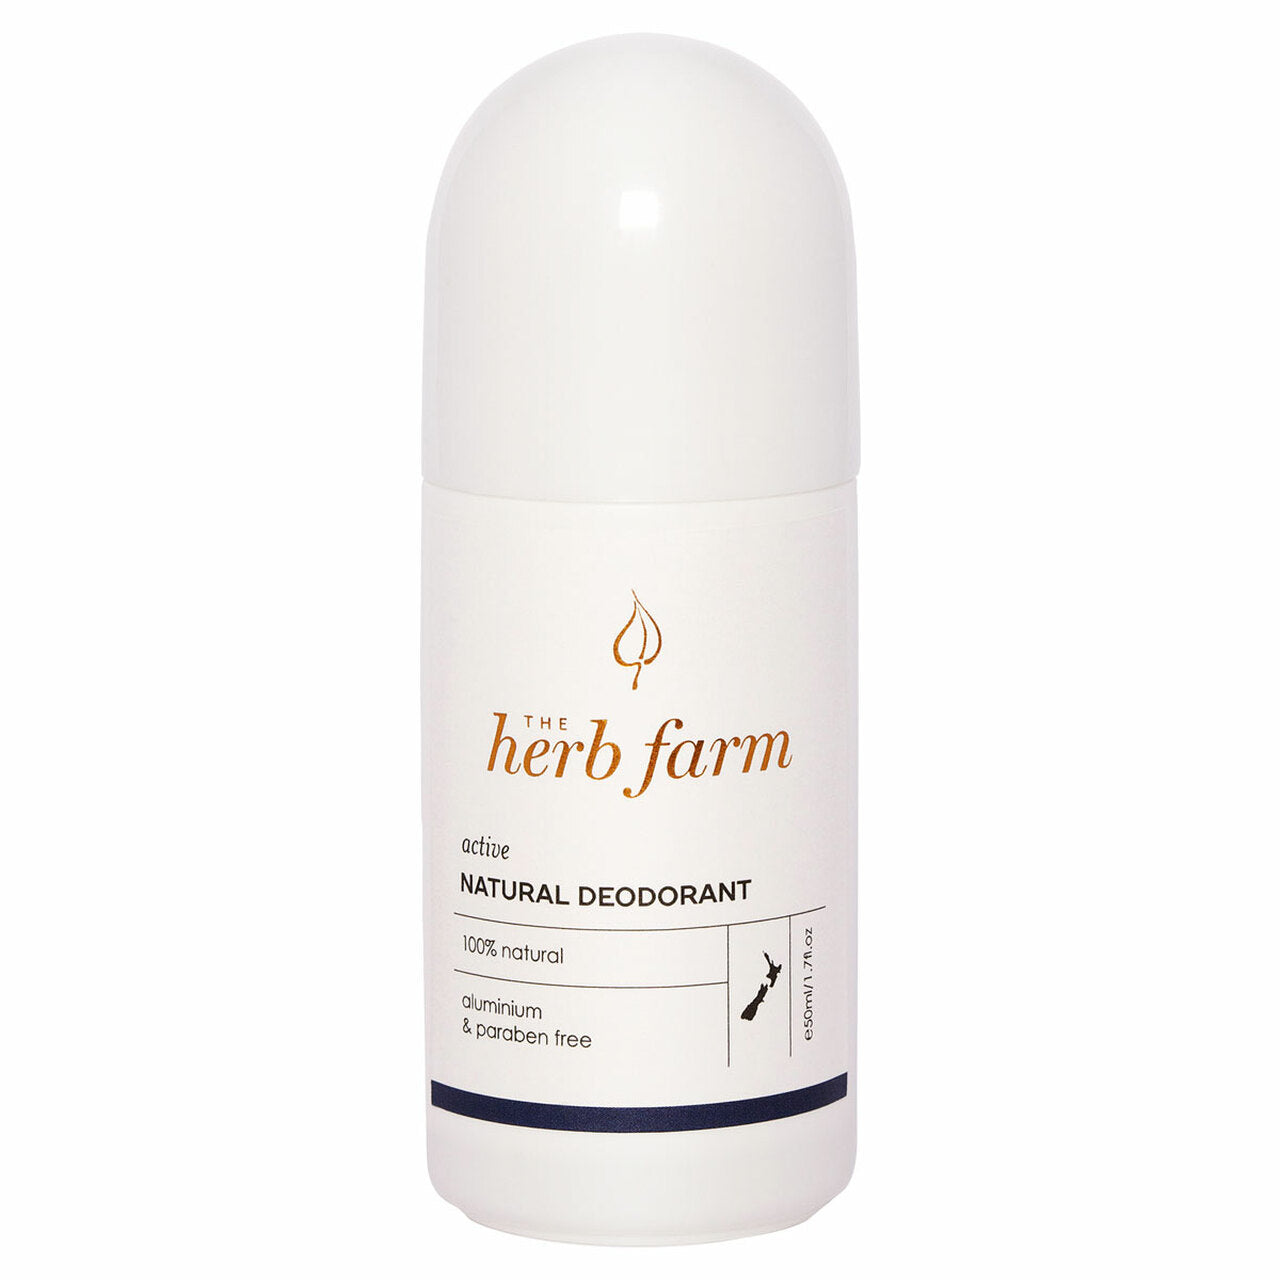 The Herb Farm Active Natural Deodorant 50ml.